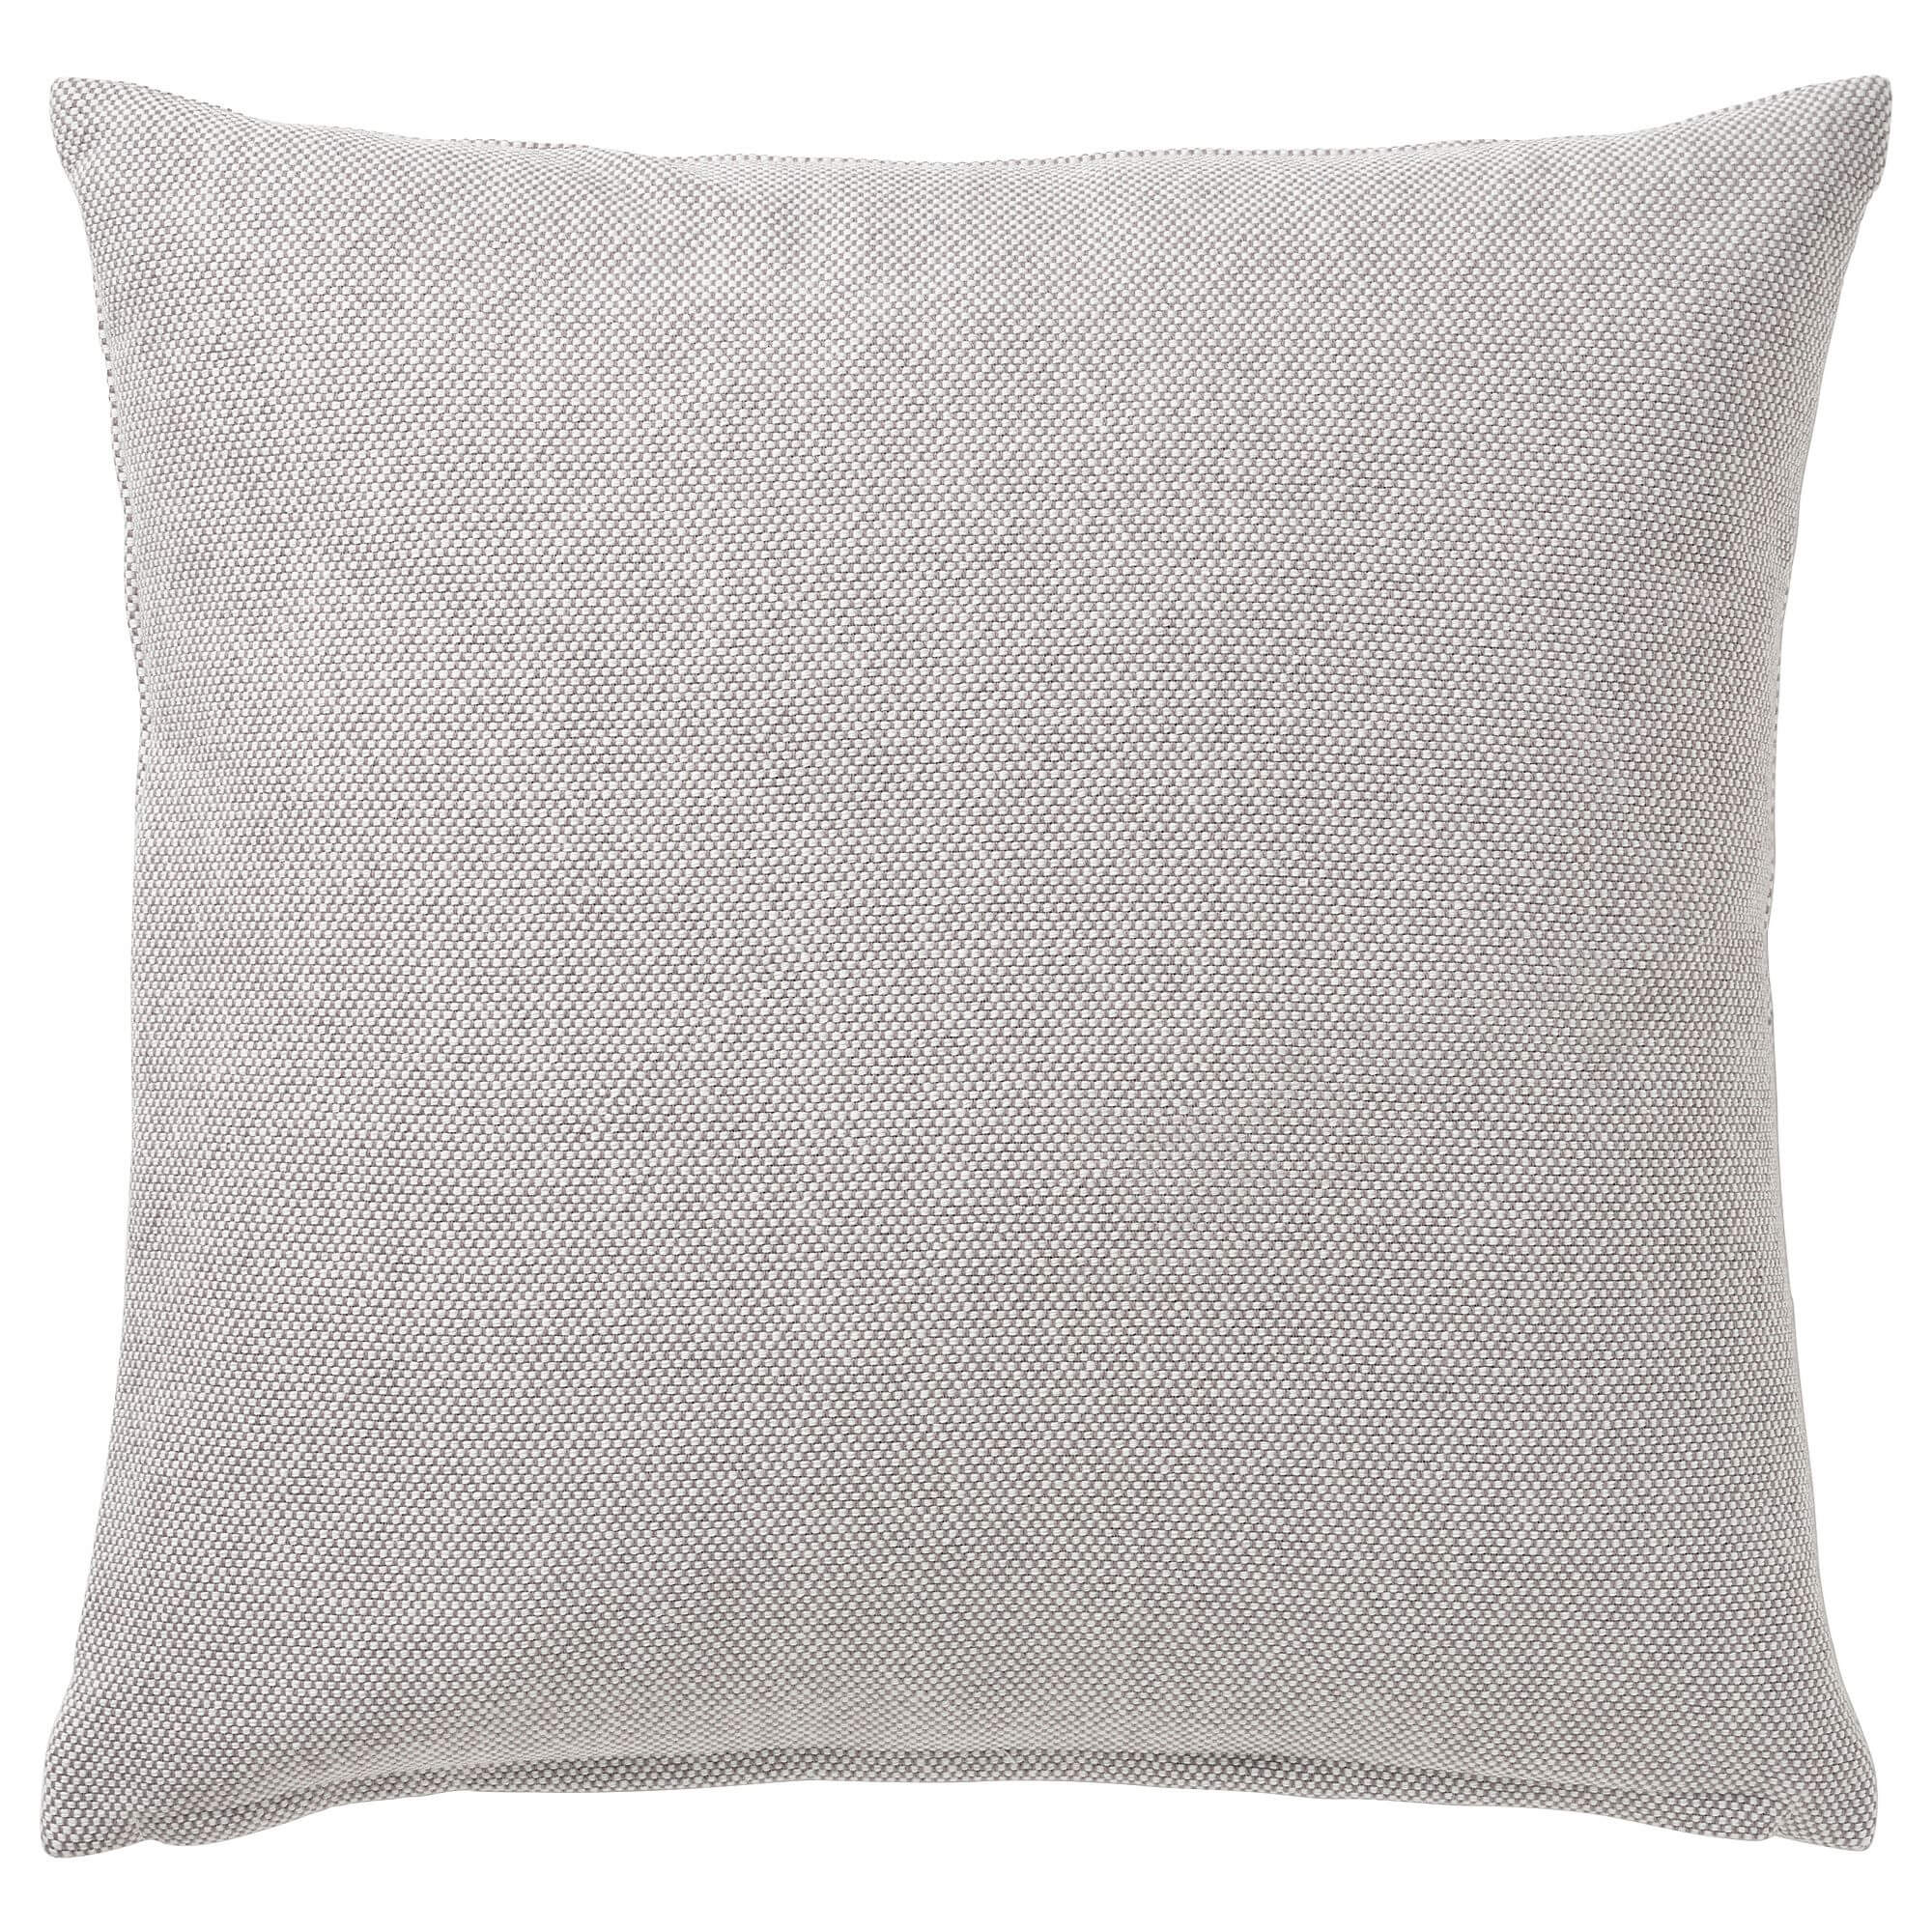 Подушка с чехлом Ikea Sandtrav 45х45, серо-белый